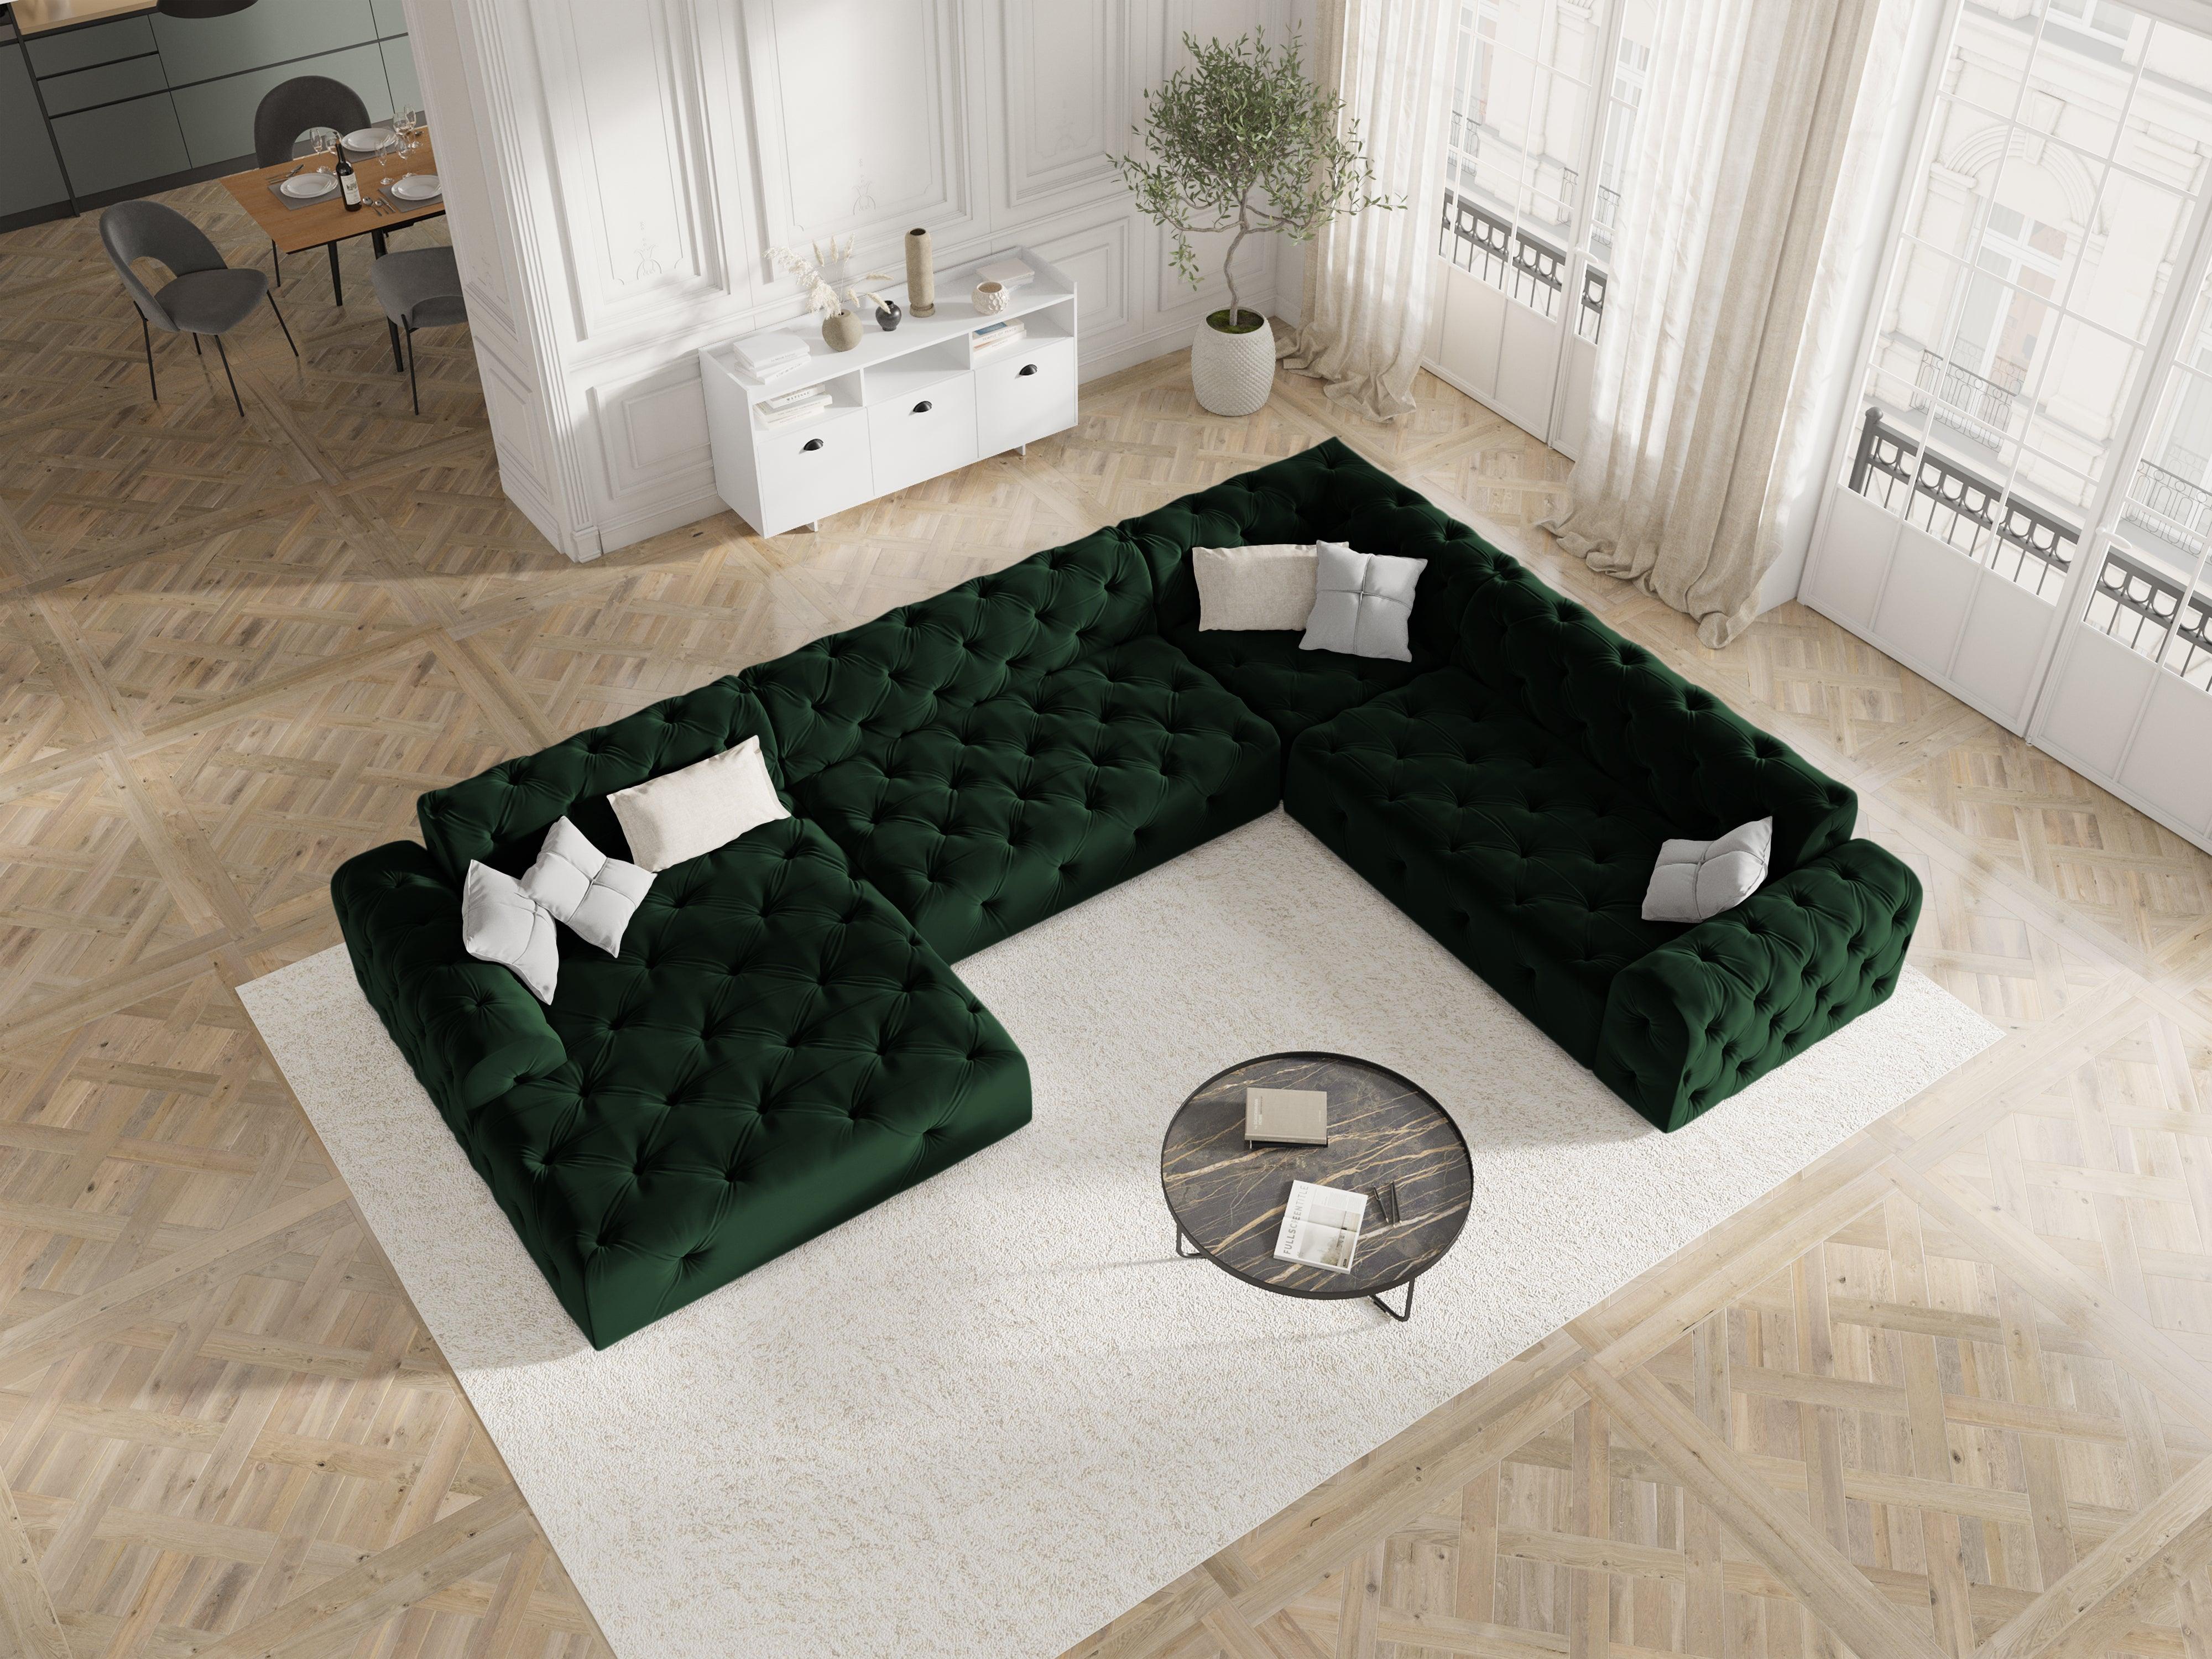 Velvet Panoramic Right Corner Sofa, "Candice", 6 Seats, 334x254x80
Made in Europe, Micadoni, Eye on Design